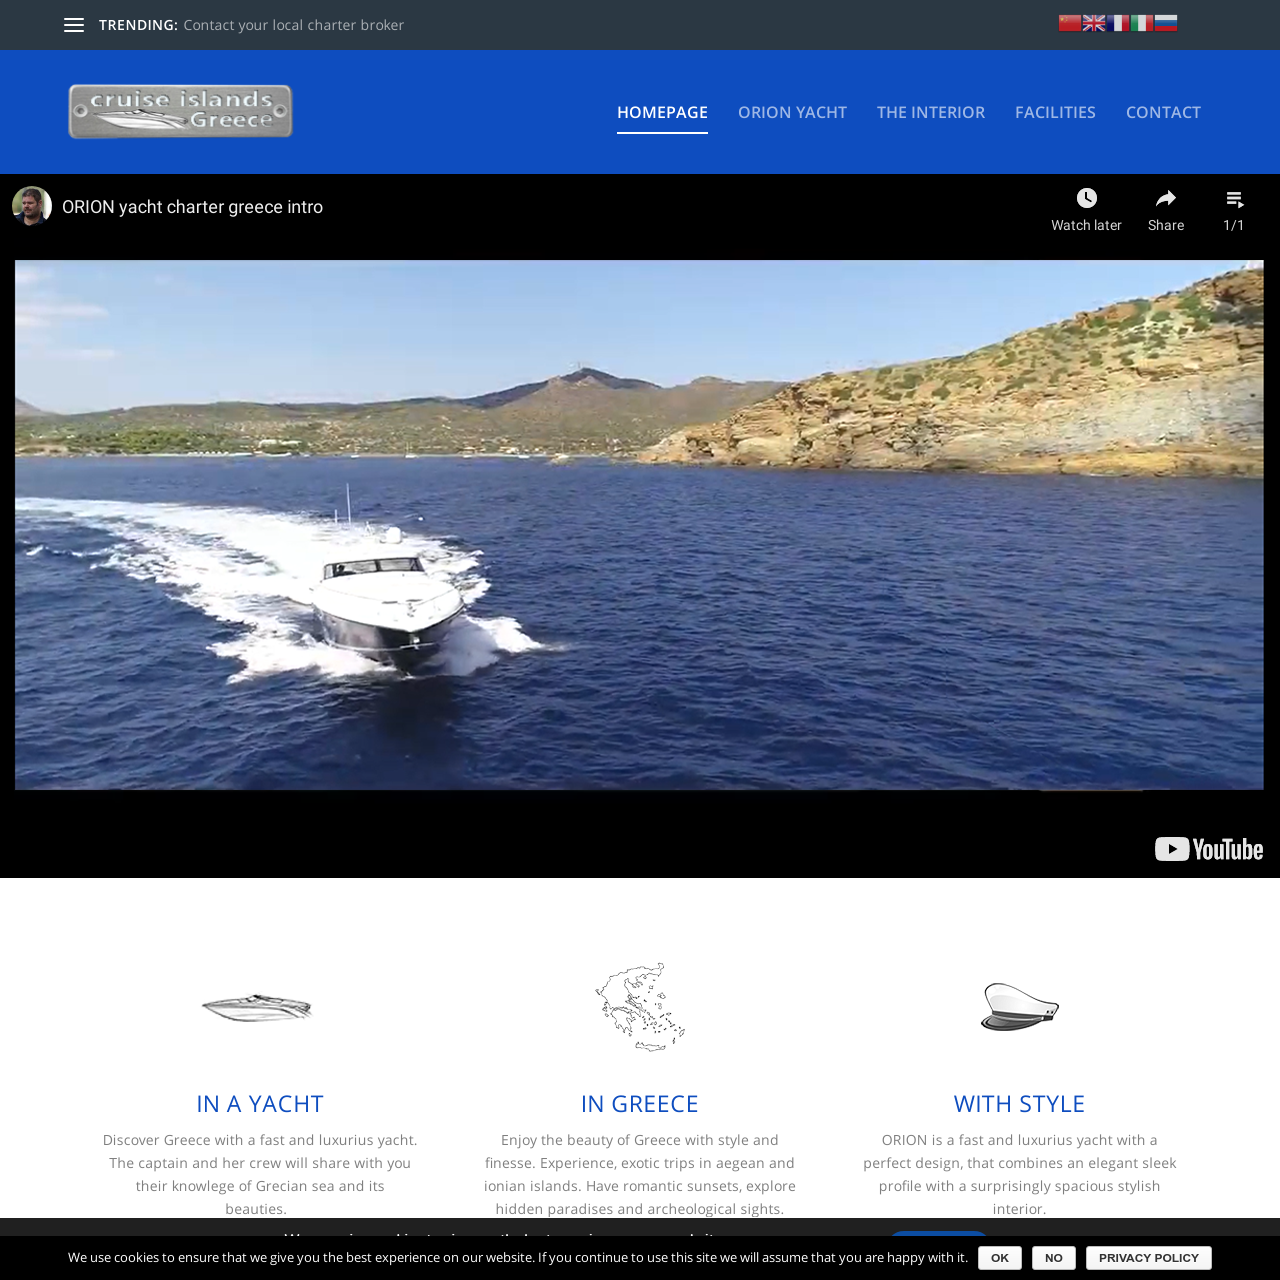 cruise-islands-greece.com